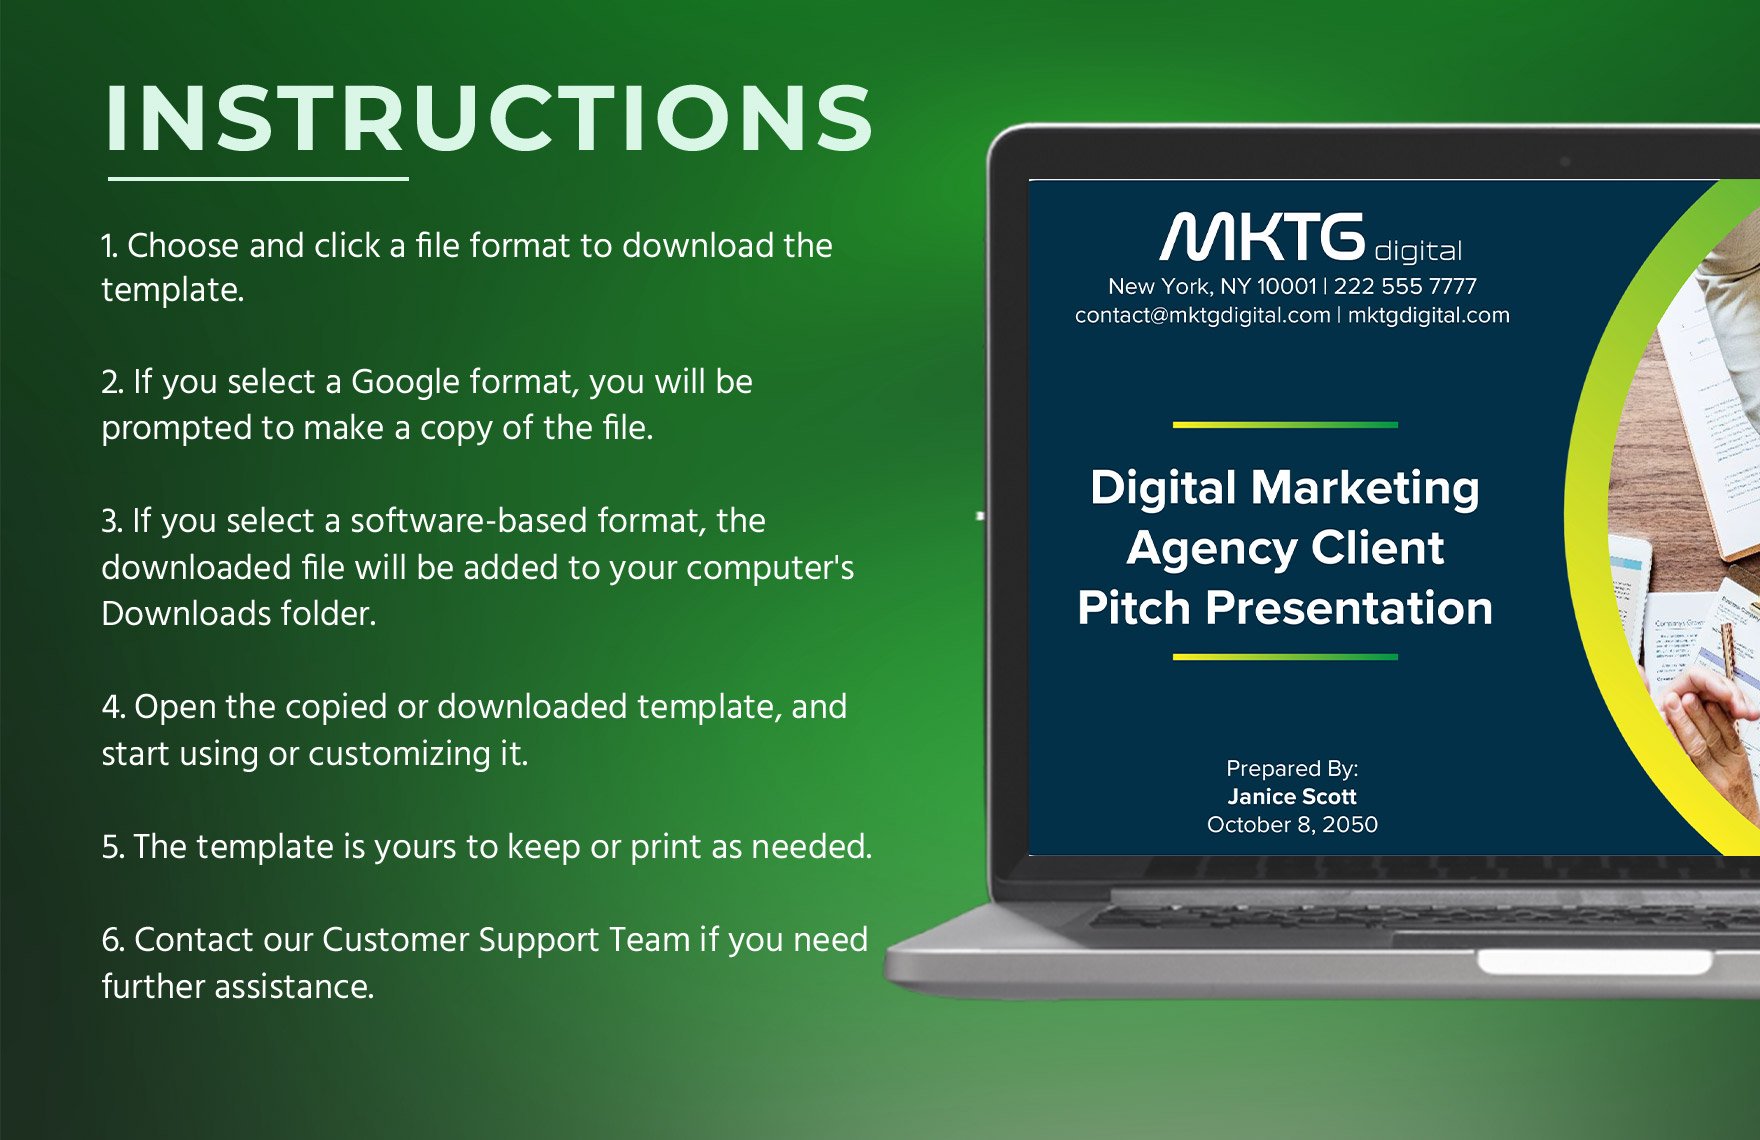 Digital Marketing Agency Client Pitch Presentation Template